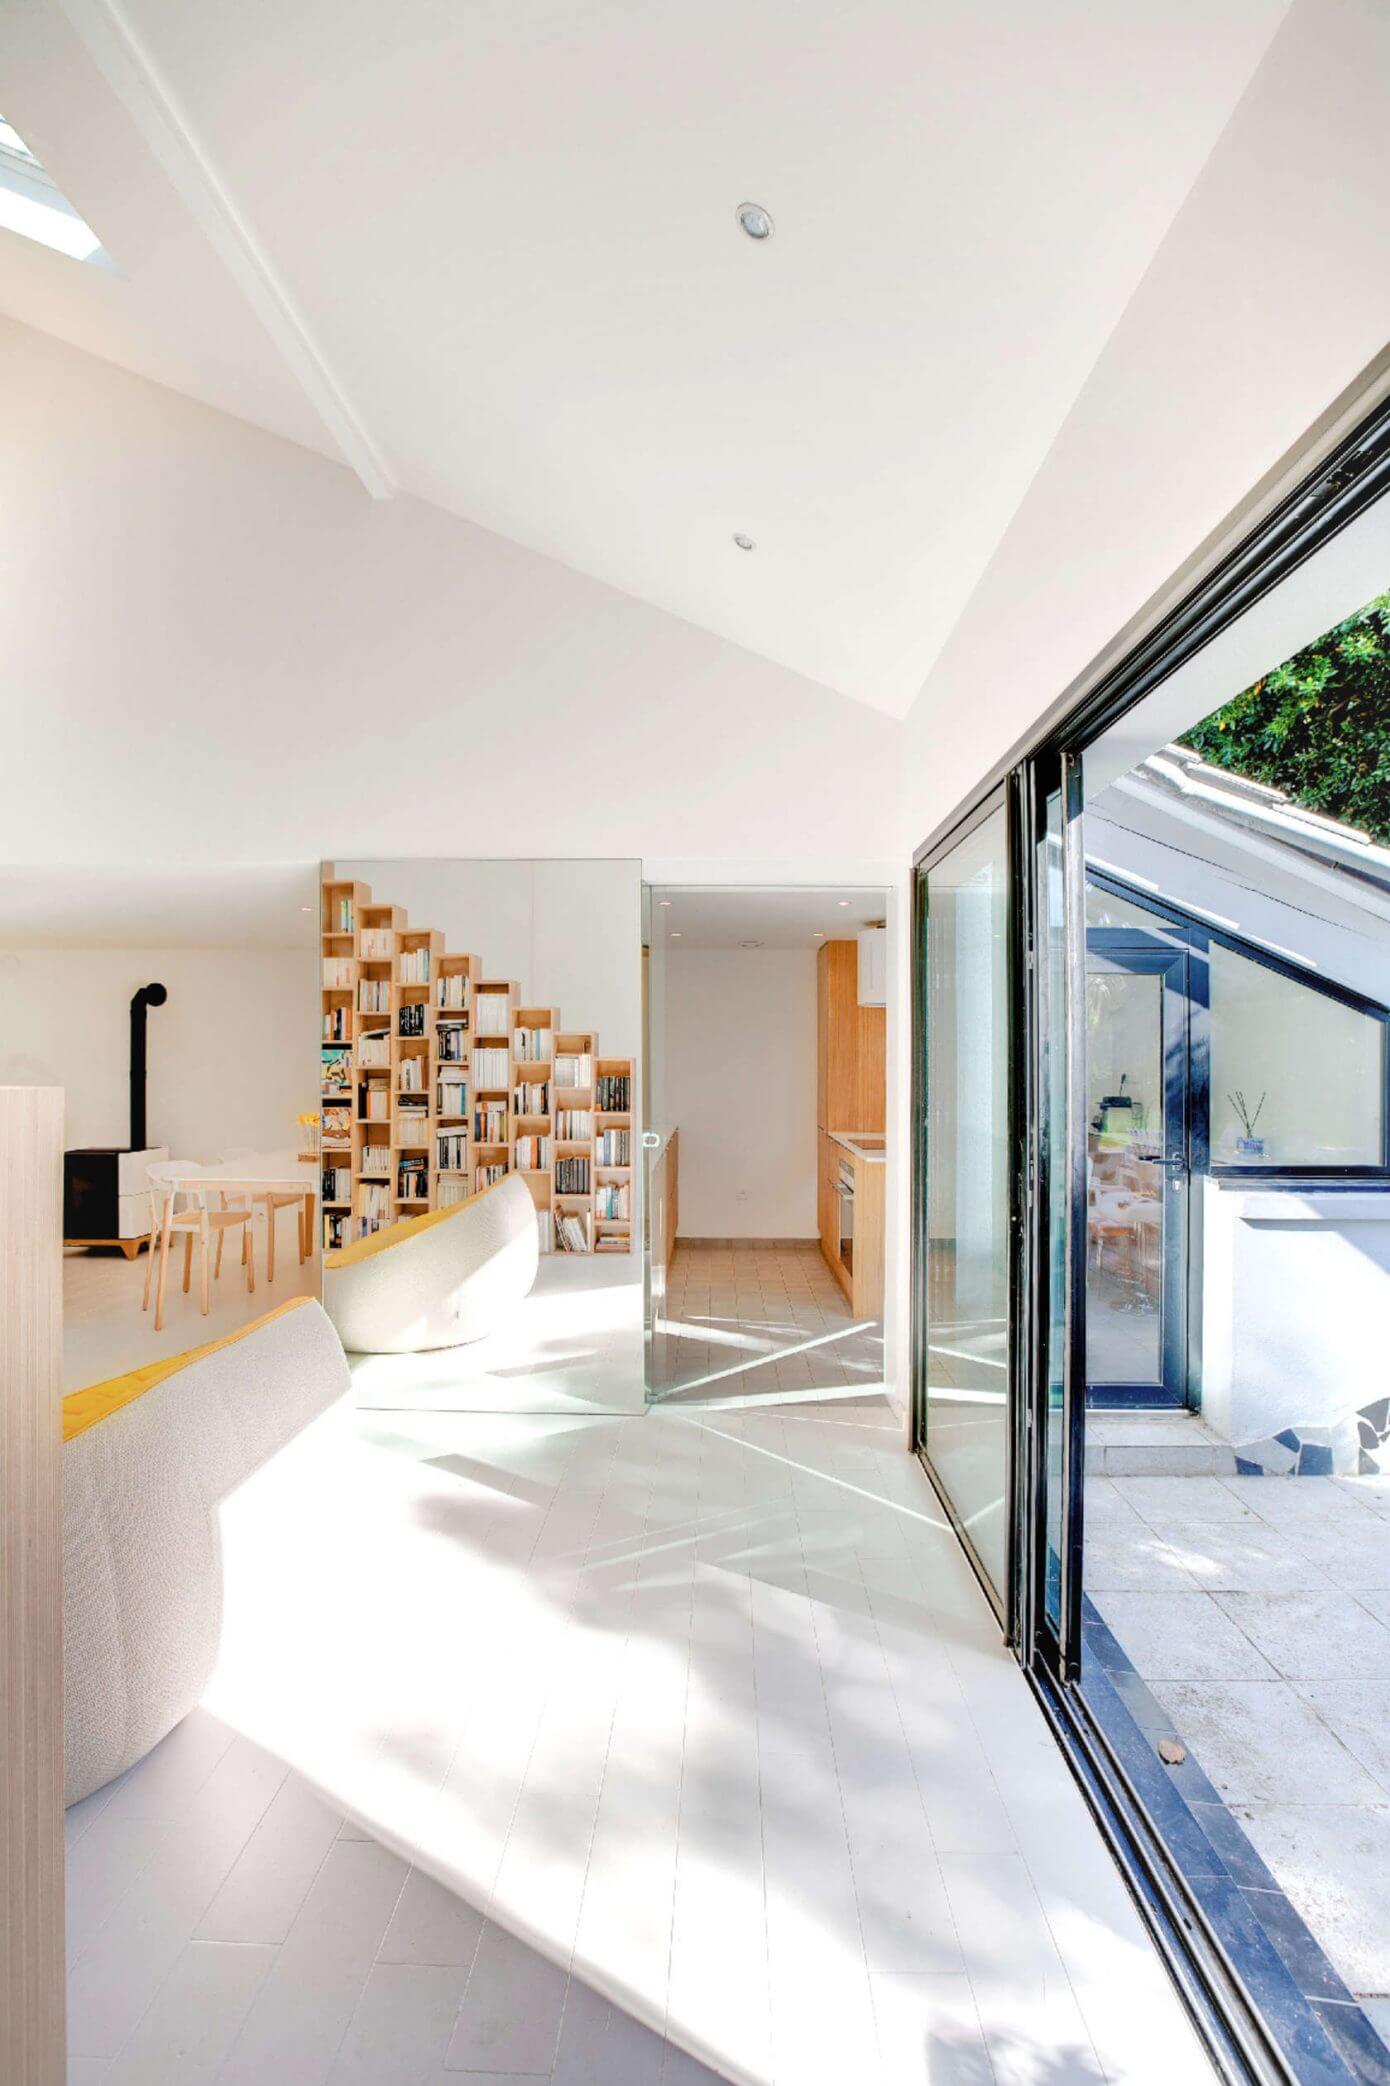 Bookshelf House by Andrea Mosca Creative Studio